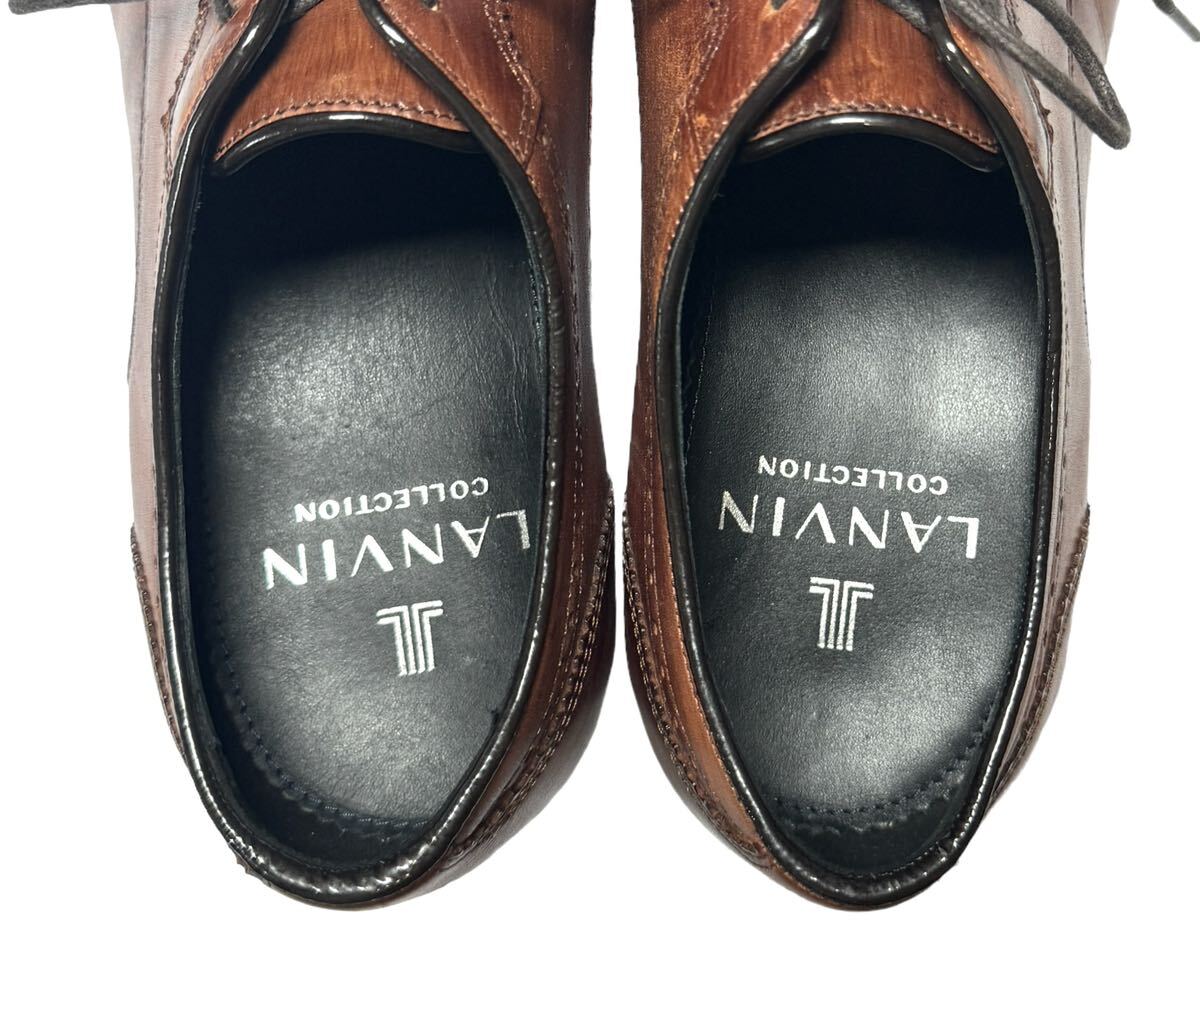  Lanvin коллекция 25cm 83376 Brown LANVIN COLLECTION натуральная кожа распорка chip кожа обувь платье обувь бизнес USED товар 